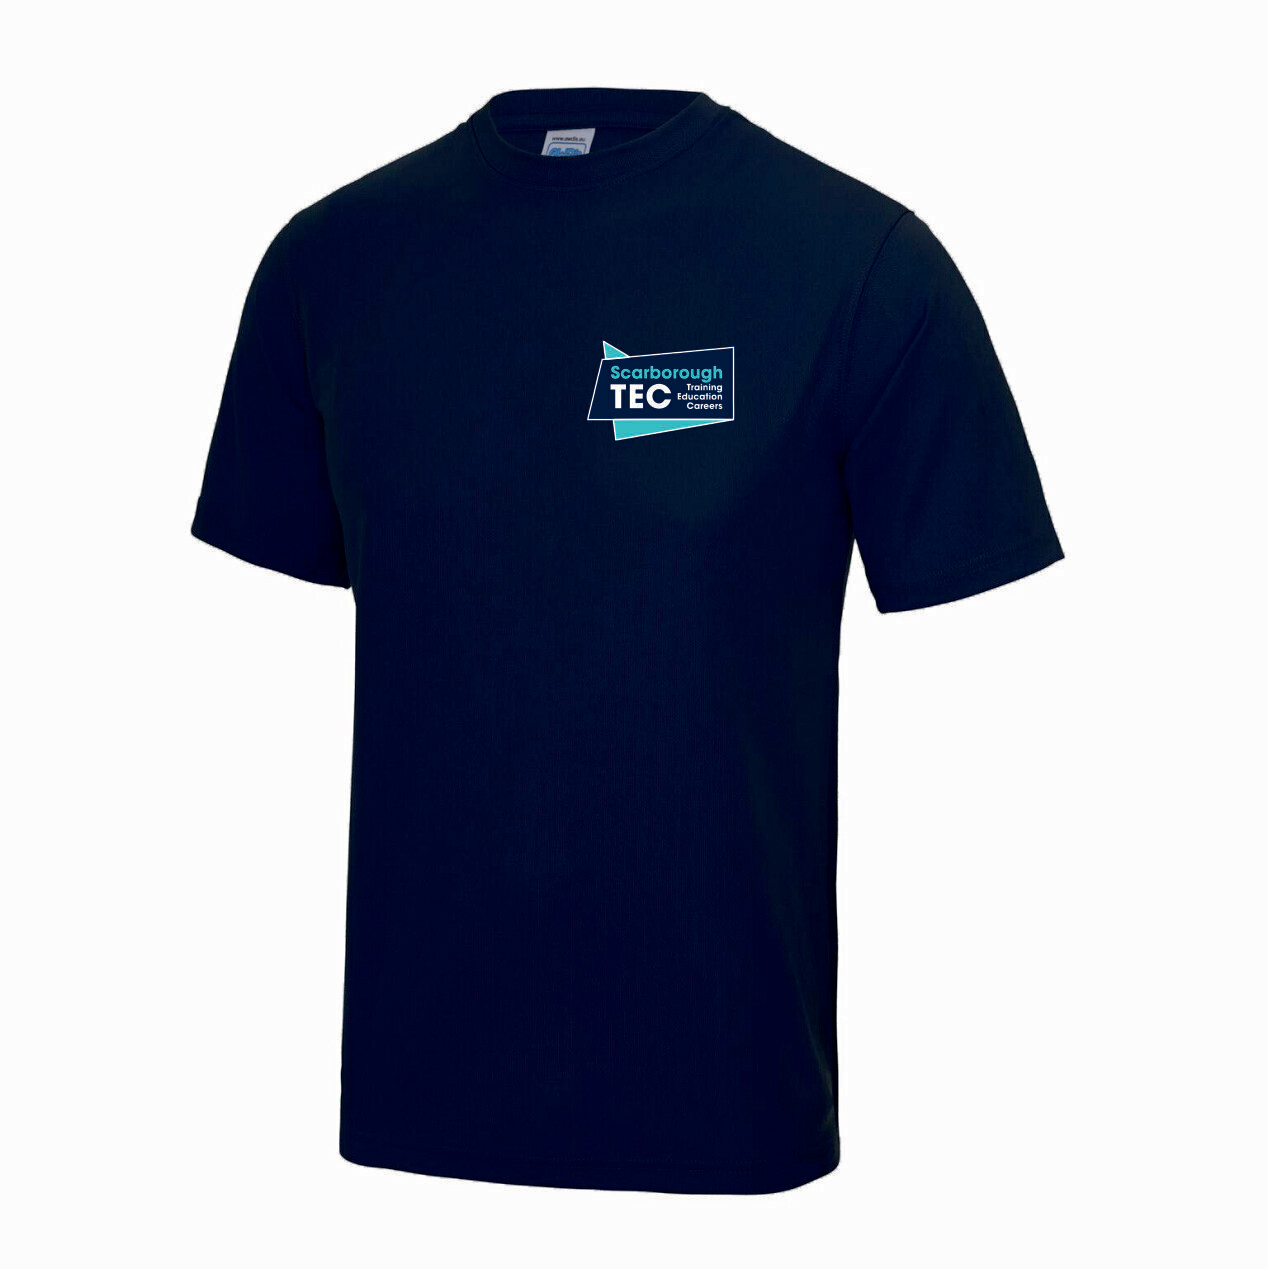 Scarborough TEC Cool Tec T-Shirt (Navy)